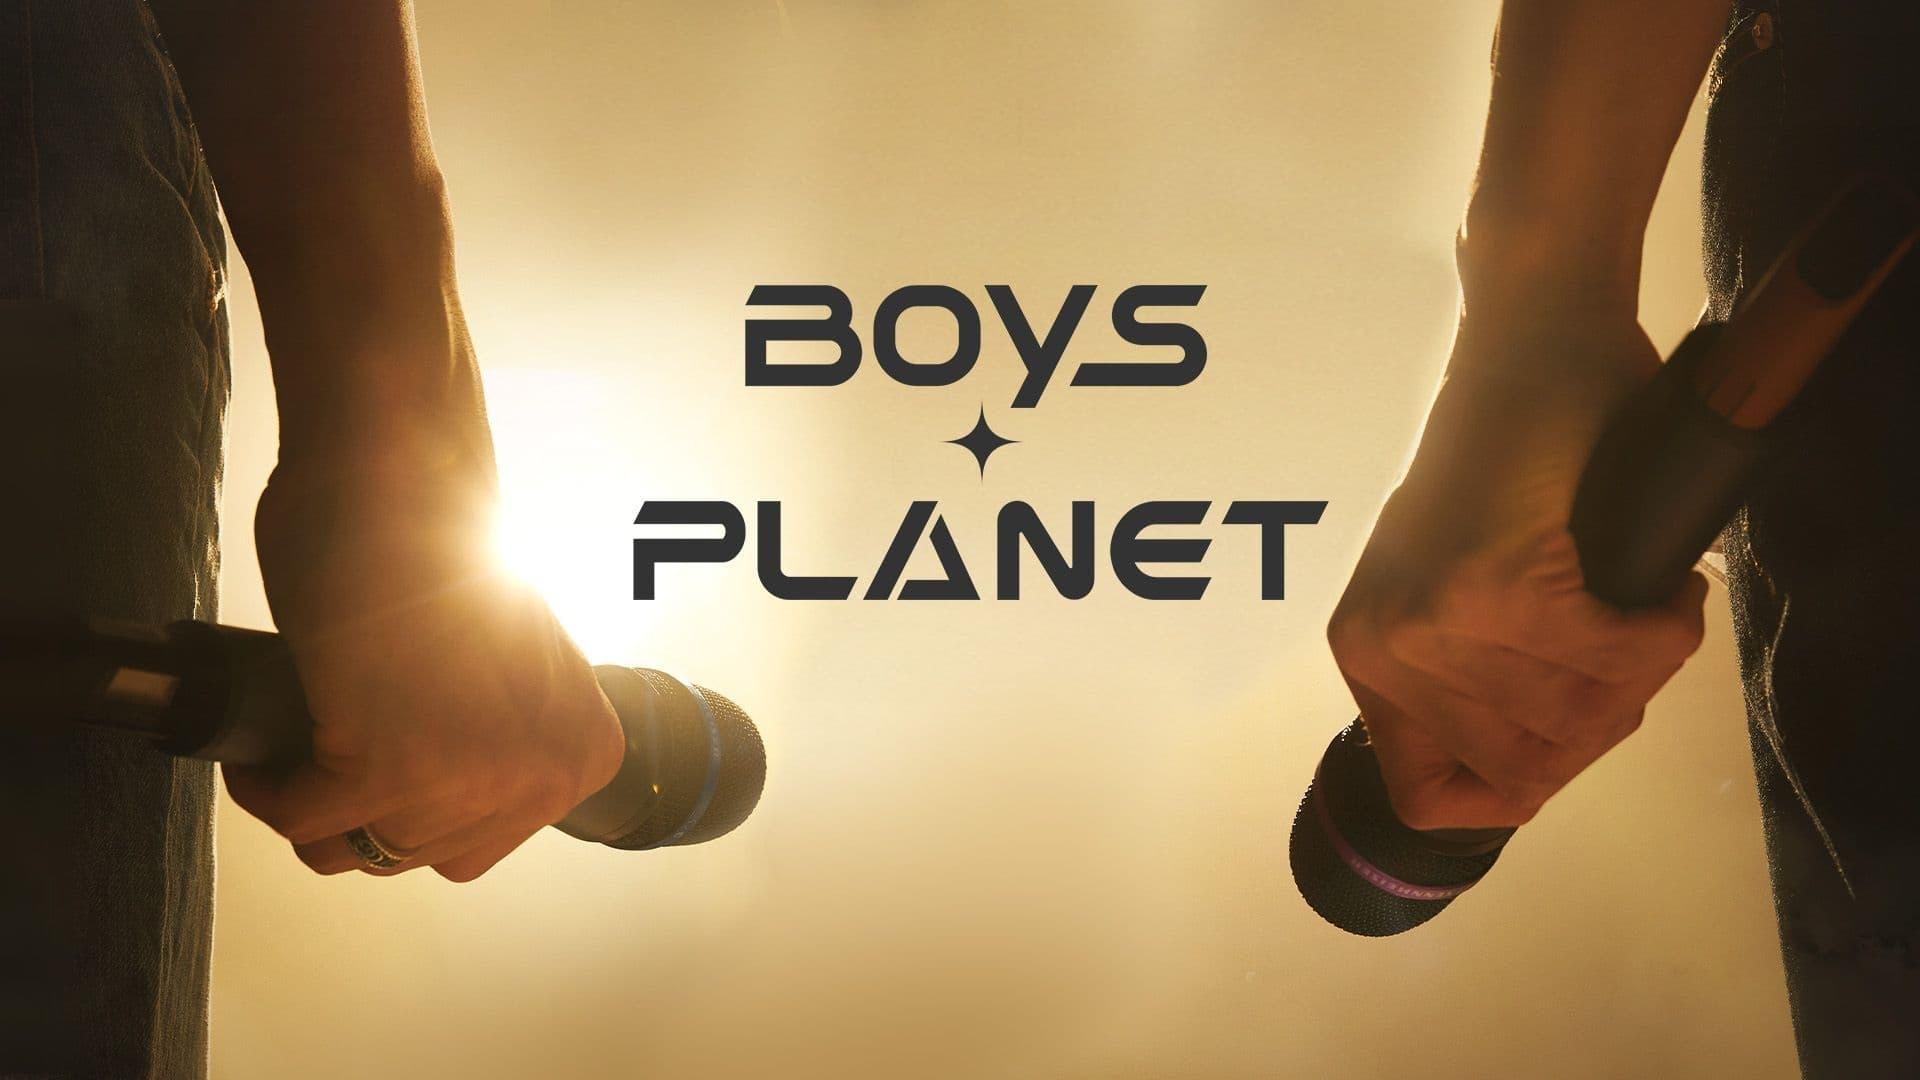 Boys Planet backdrop